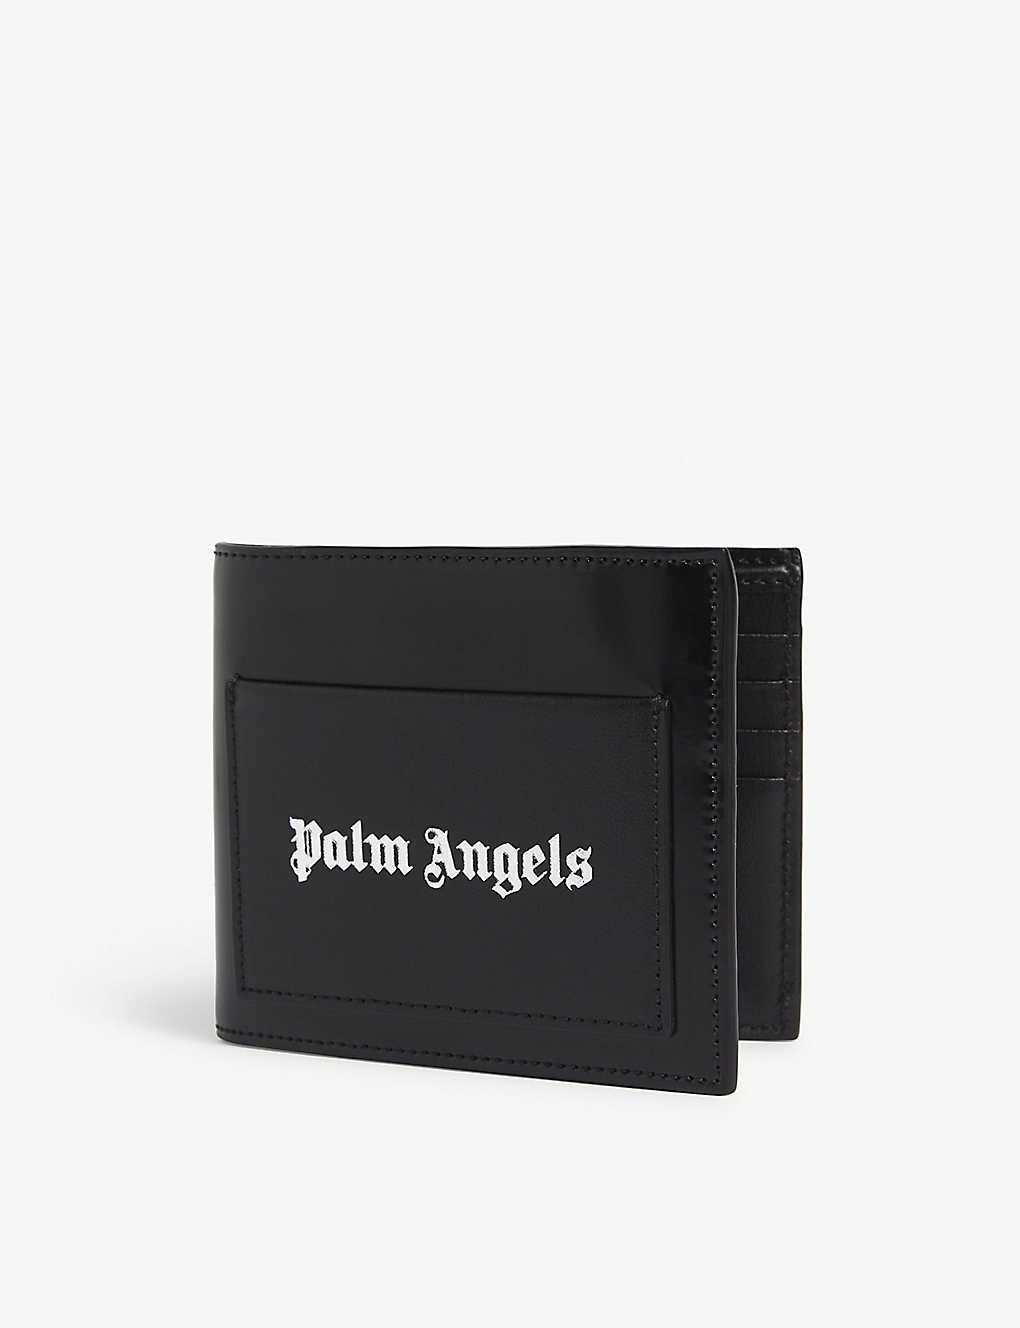 PALM ANGELS - Iconic logo leather billfold wallet | Selfridges.com